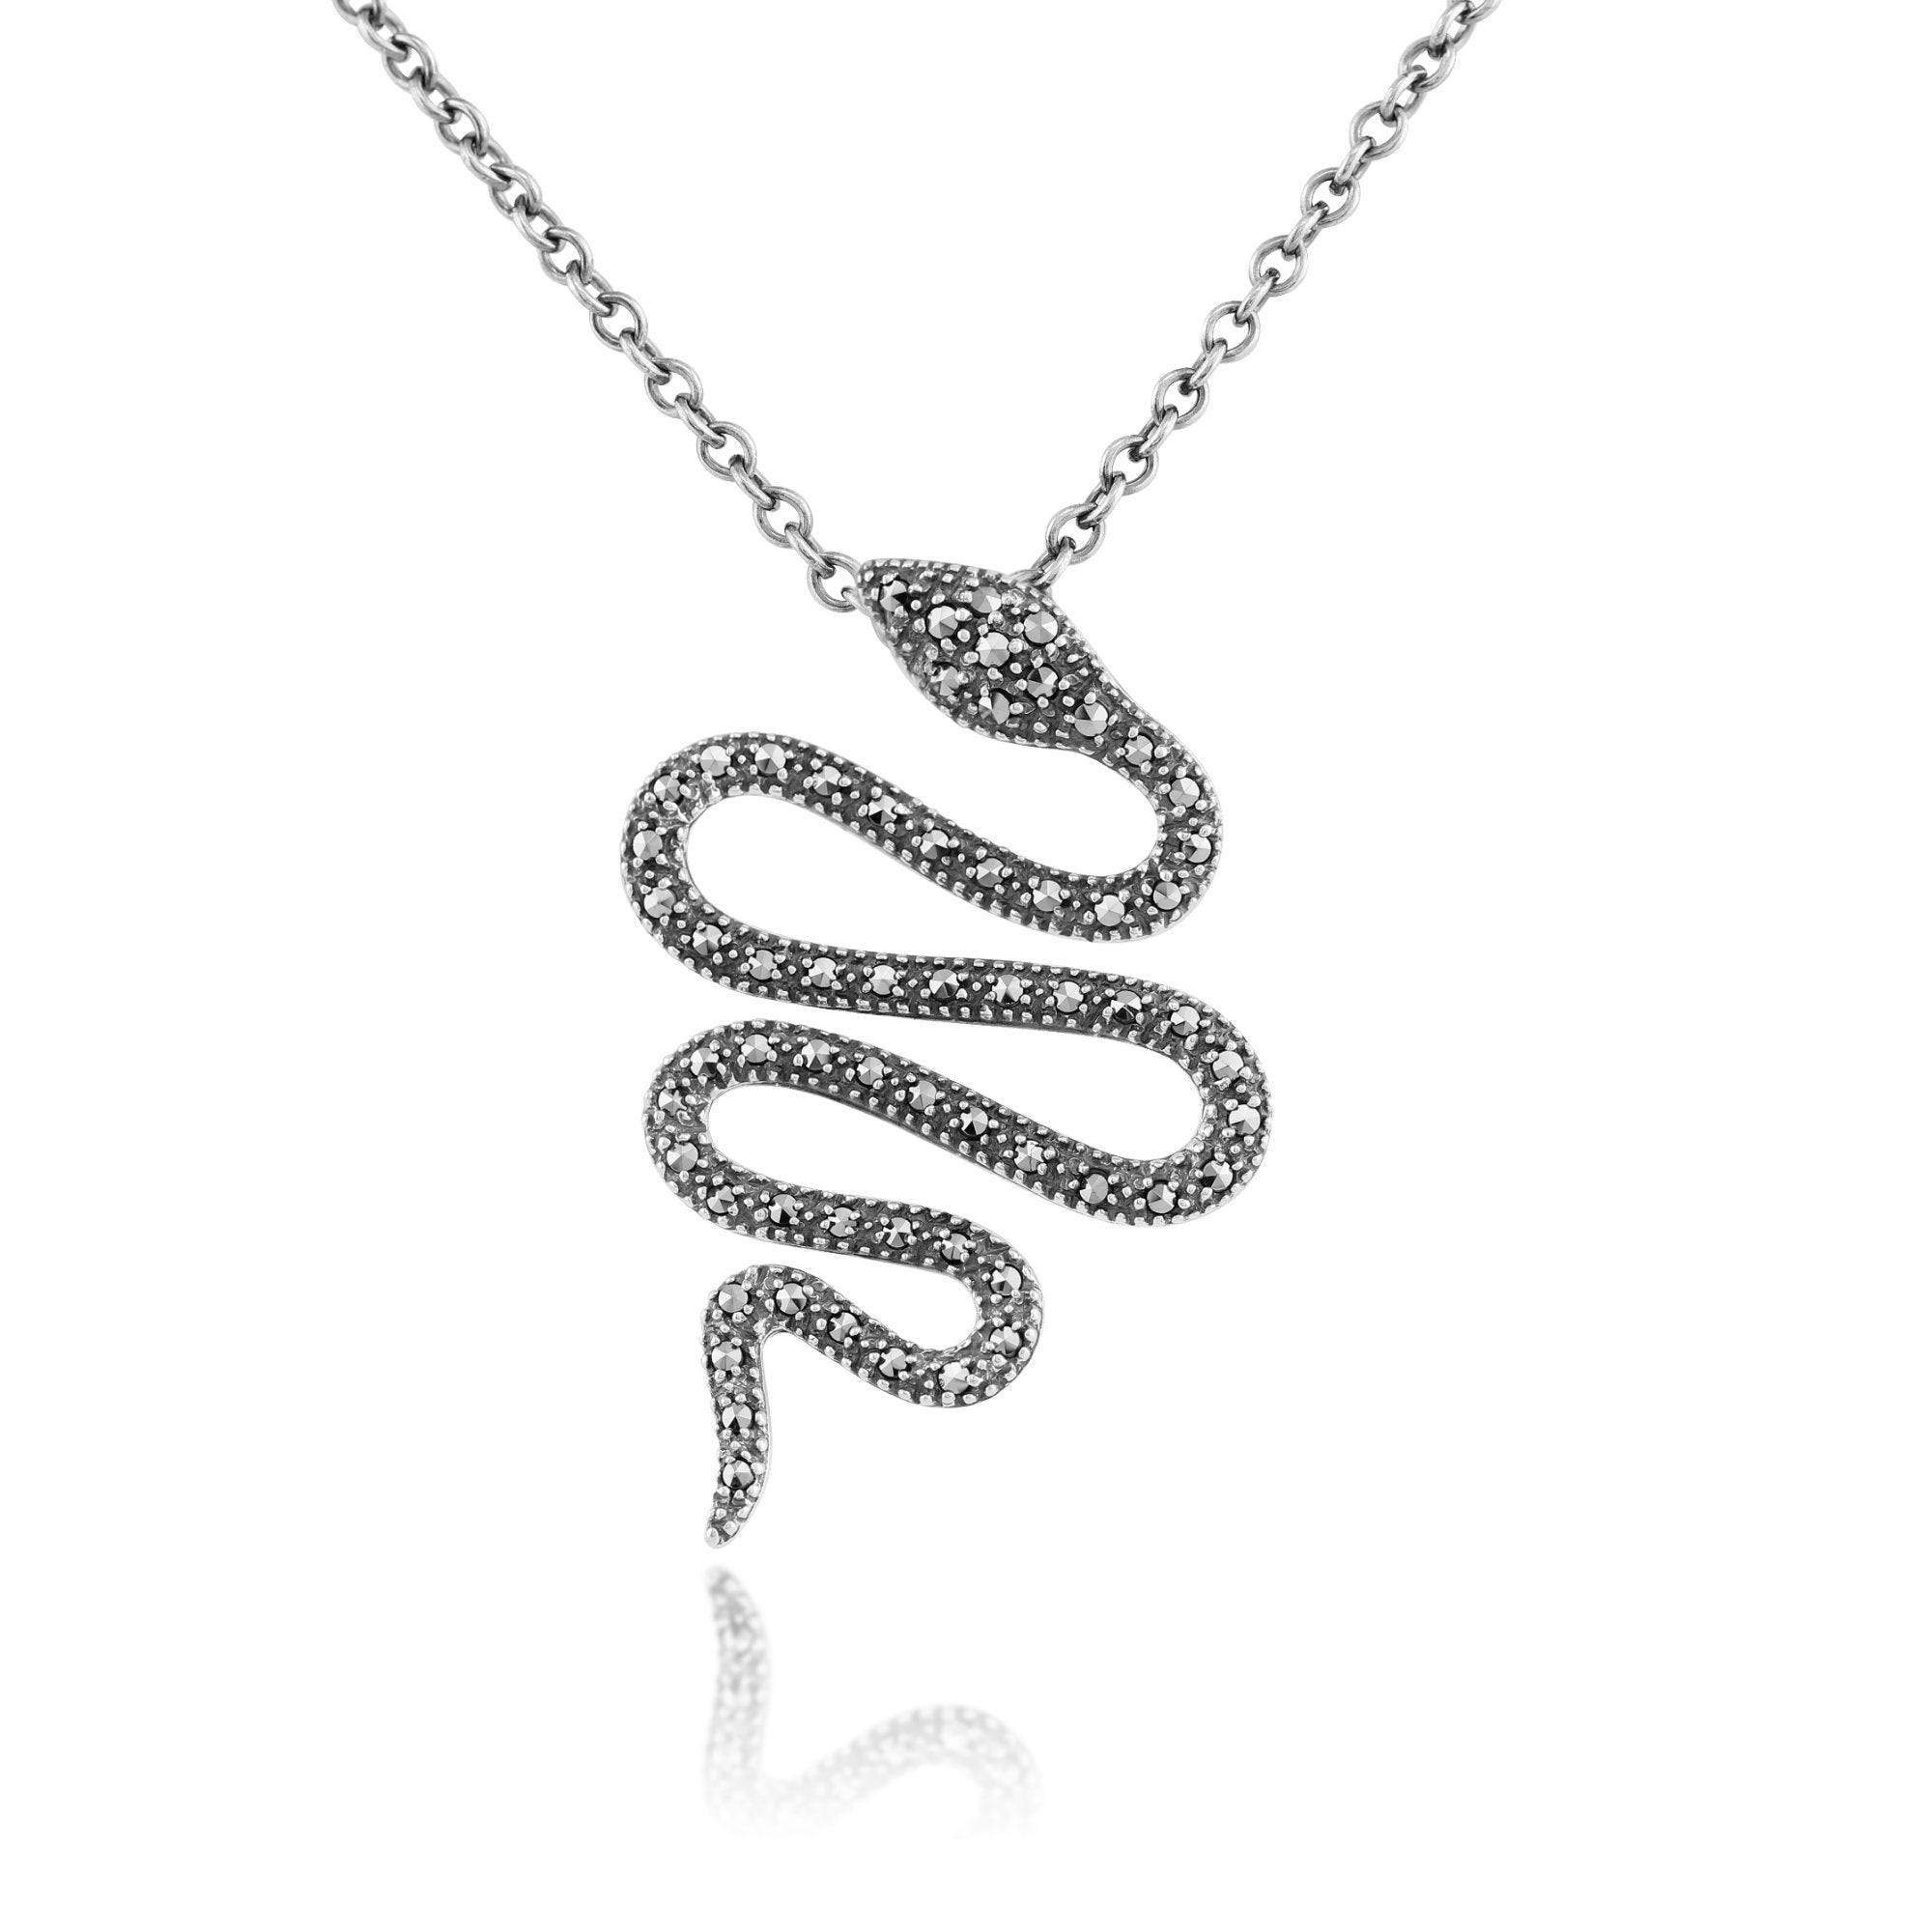 Gemondo Collana Serpente Art Nouveau Marcasite 925 Sterling Silver 0.50ct